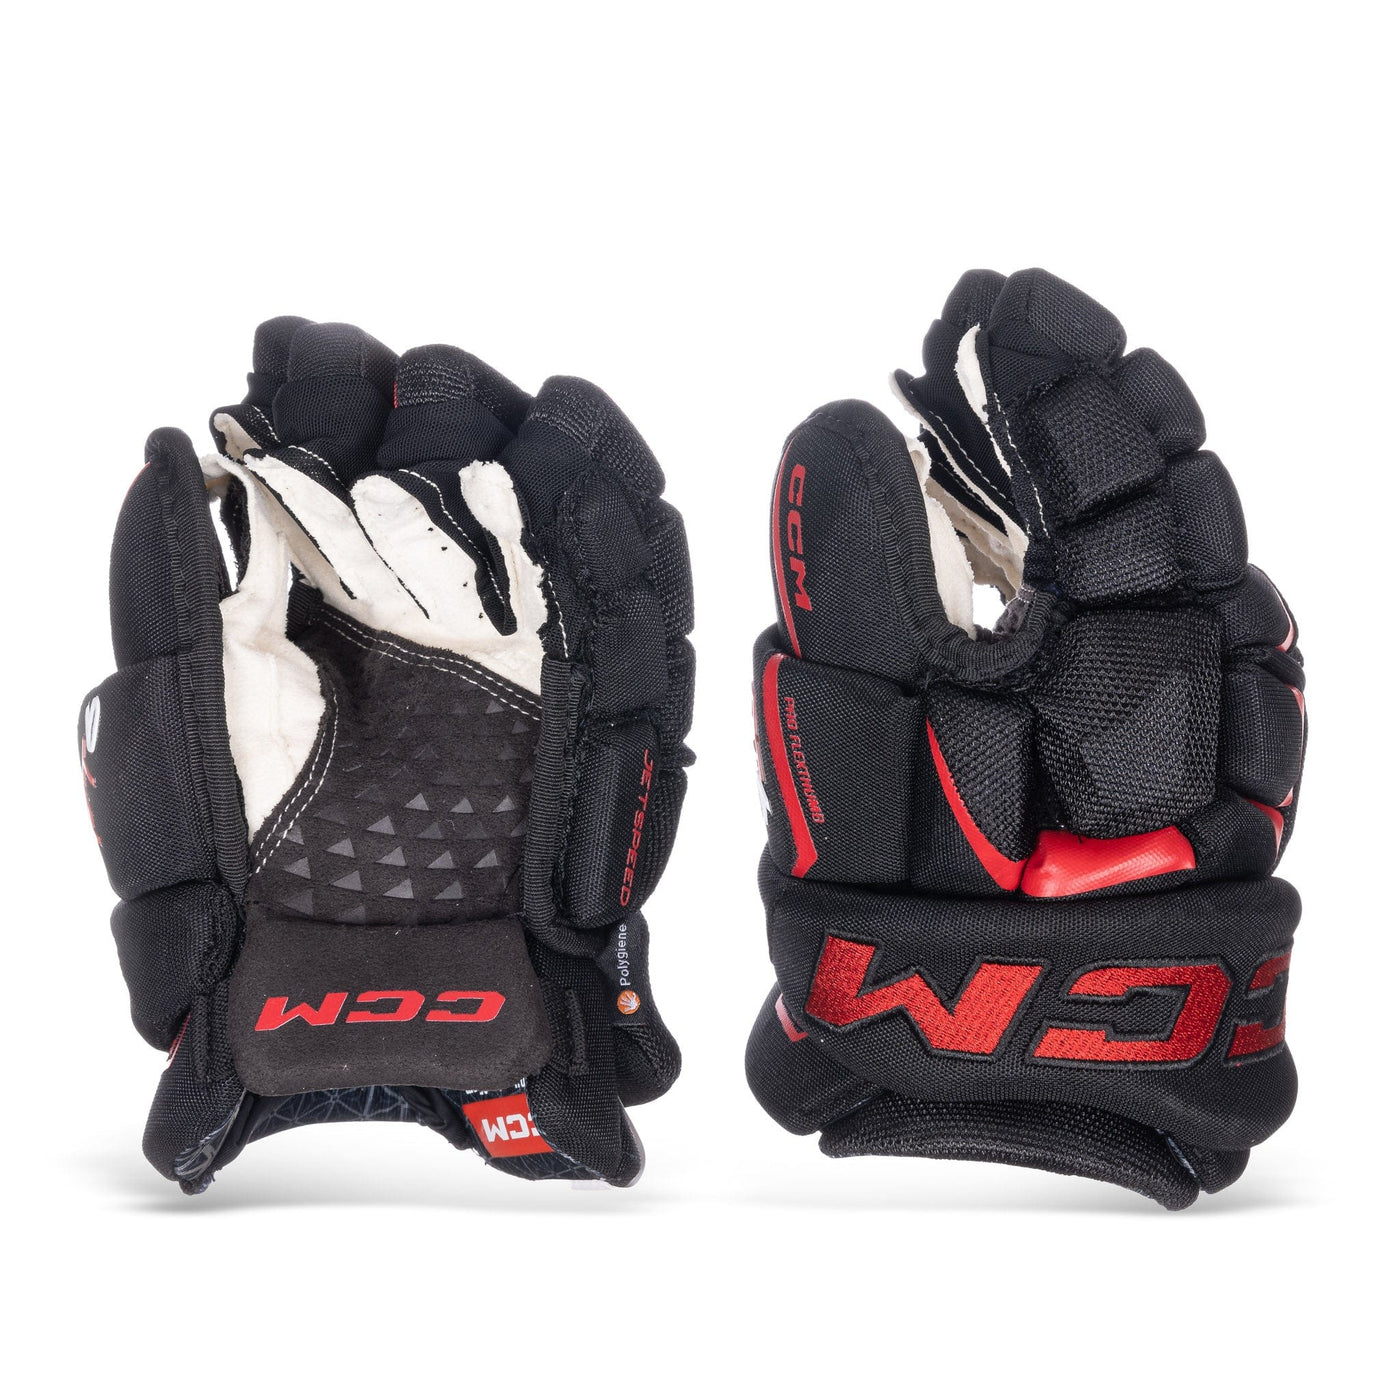 CCM Jetspeed FT6 Senior Hockey Gloves